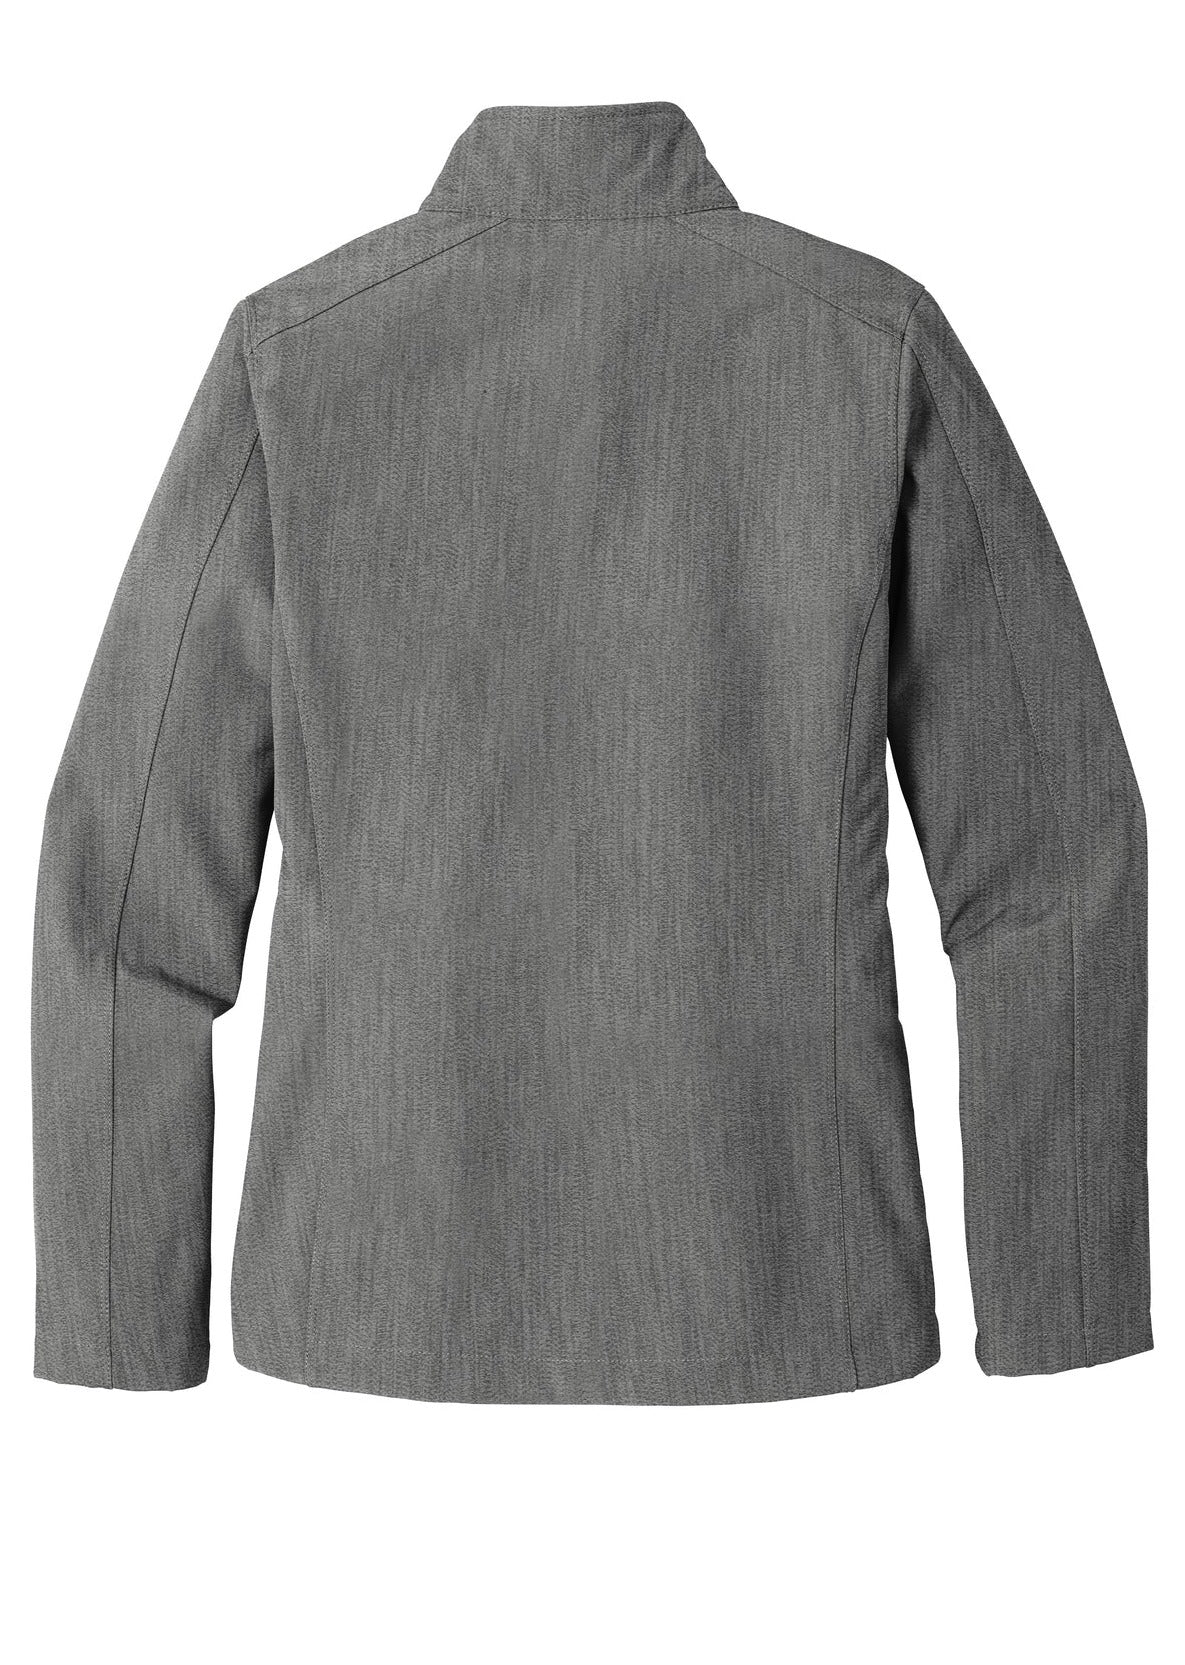 Port Authority® Ladies Core Soft Shell Jacket L317